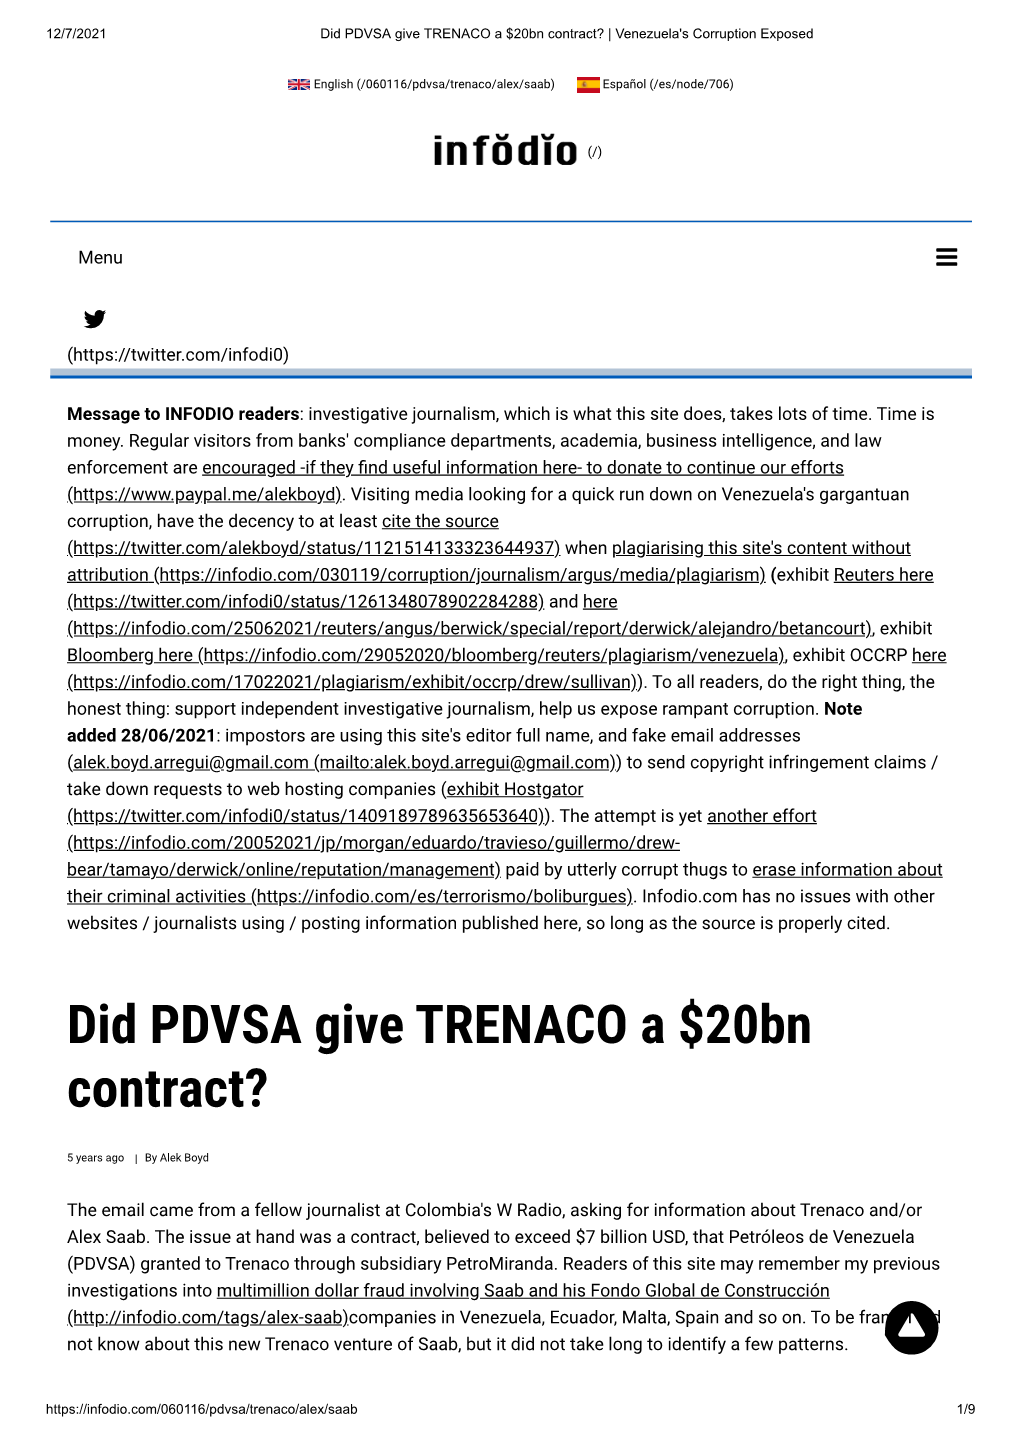 Did PDVSA Give TRENACO a $20Bn Contract? | Venezuela's Corruption Exposed